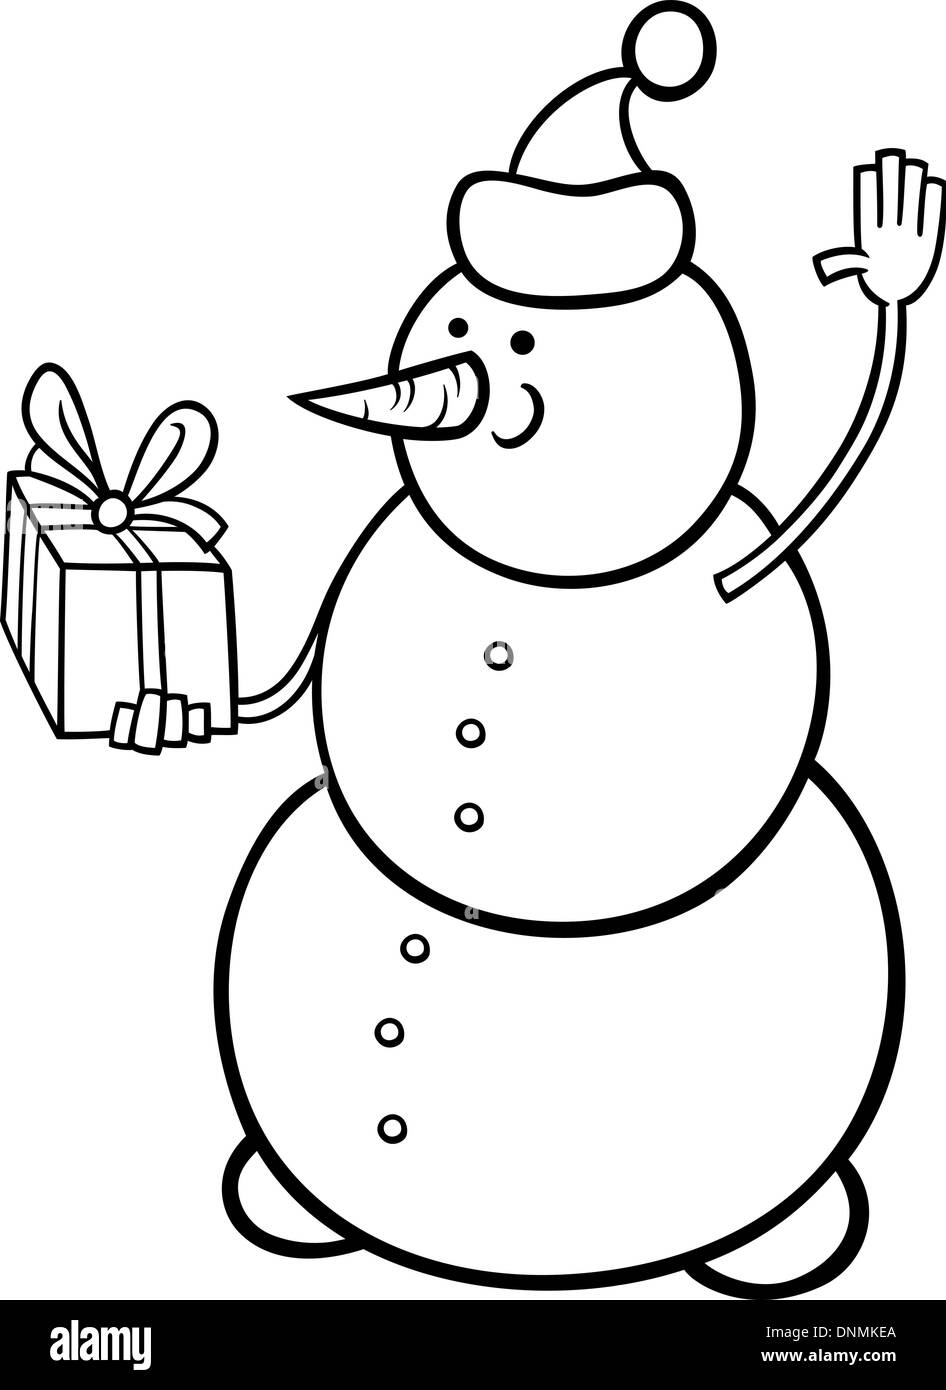 Black And White Cartoon Illustration Of Snowman As Santa Claus Stock Vector Image Art Alamy